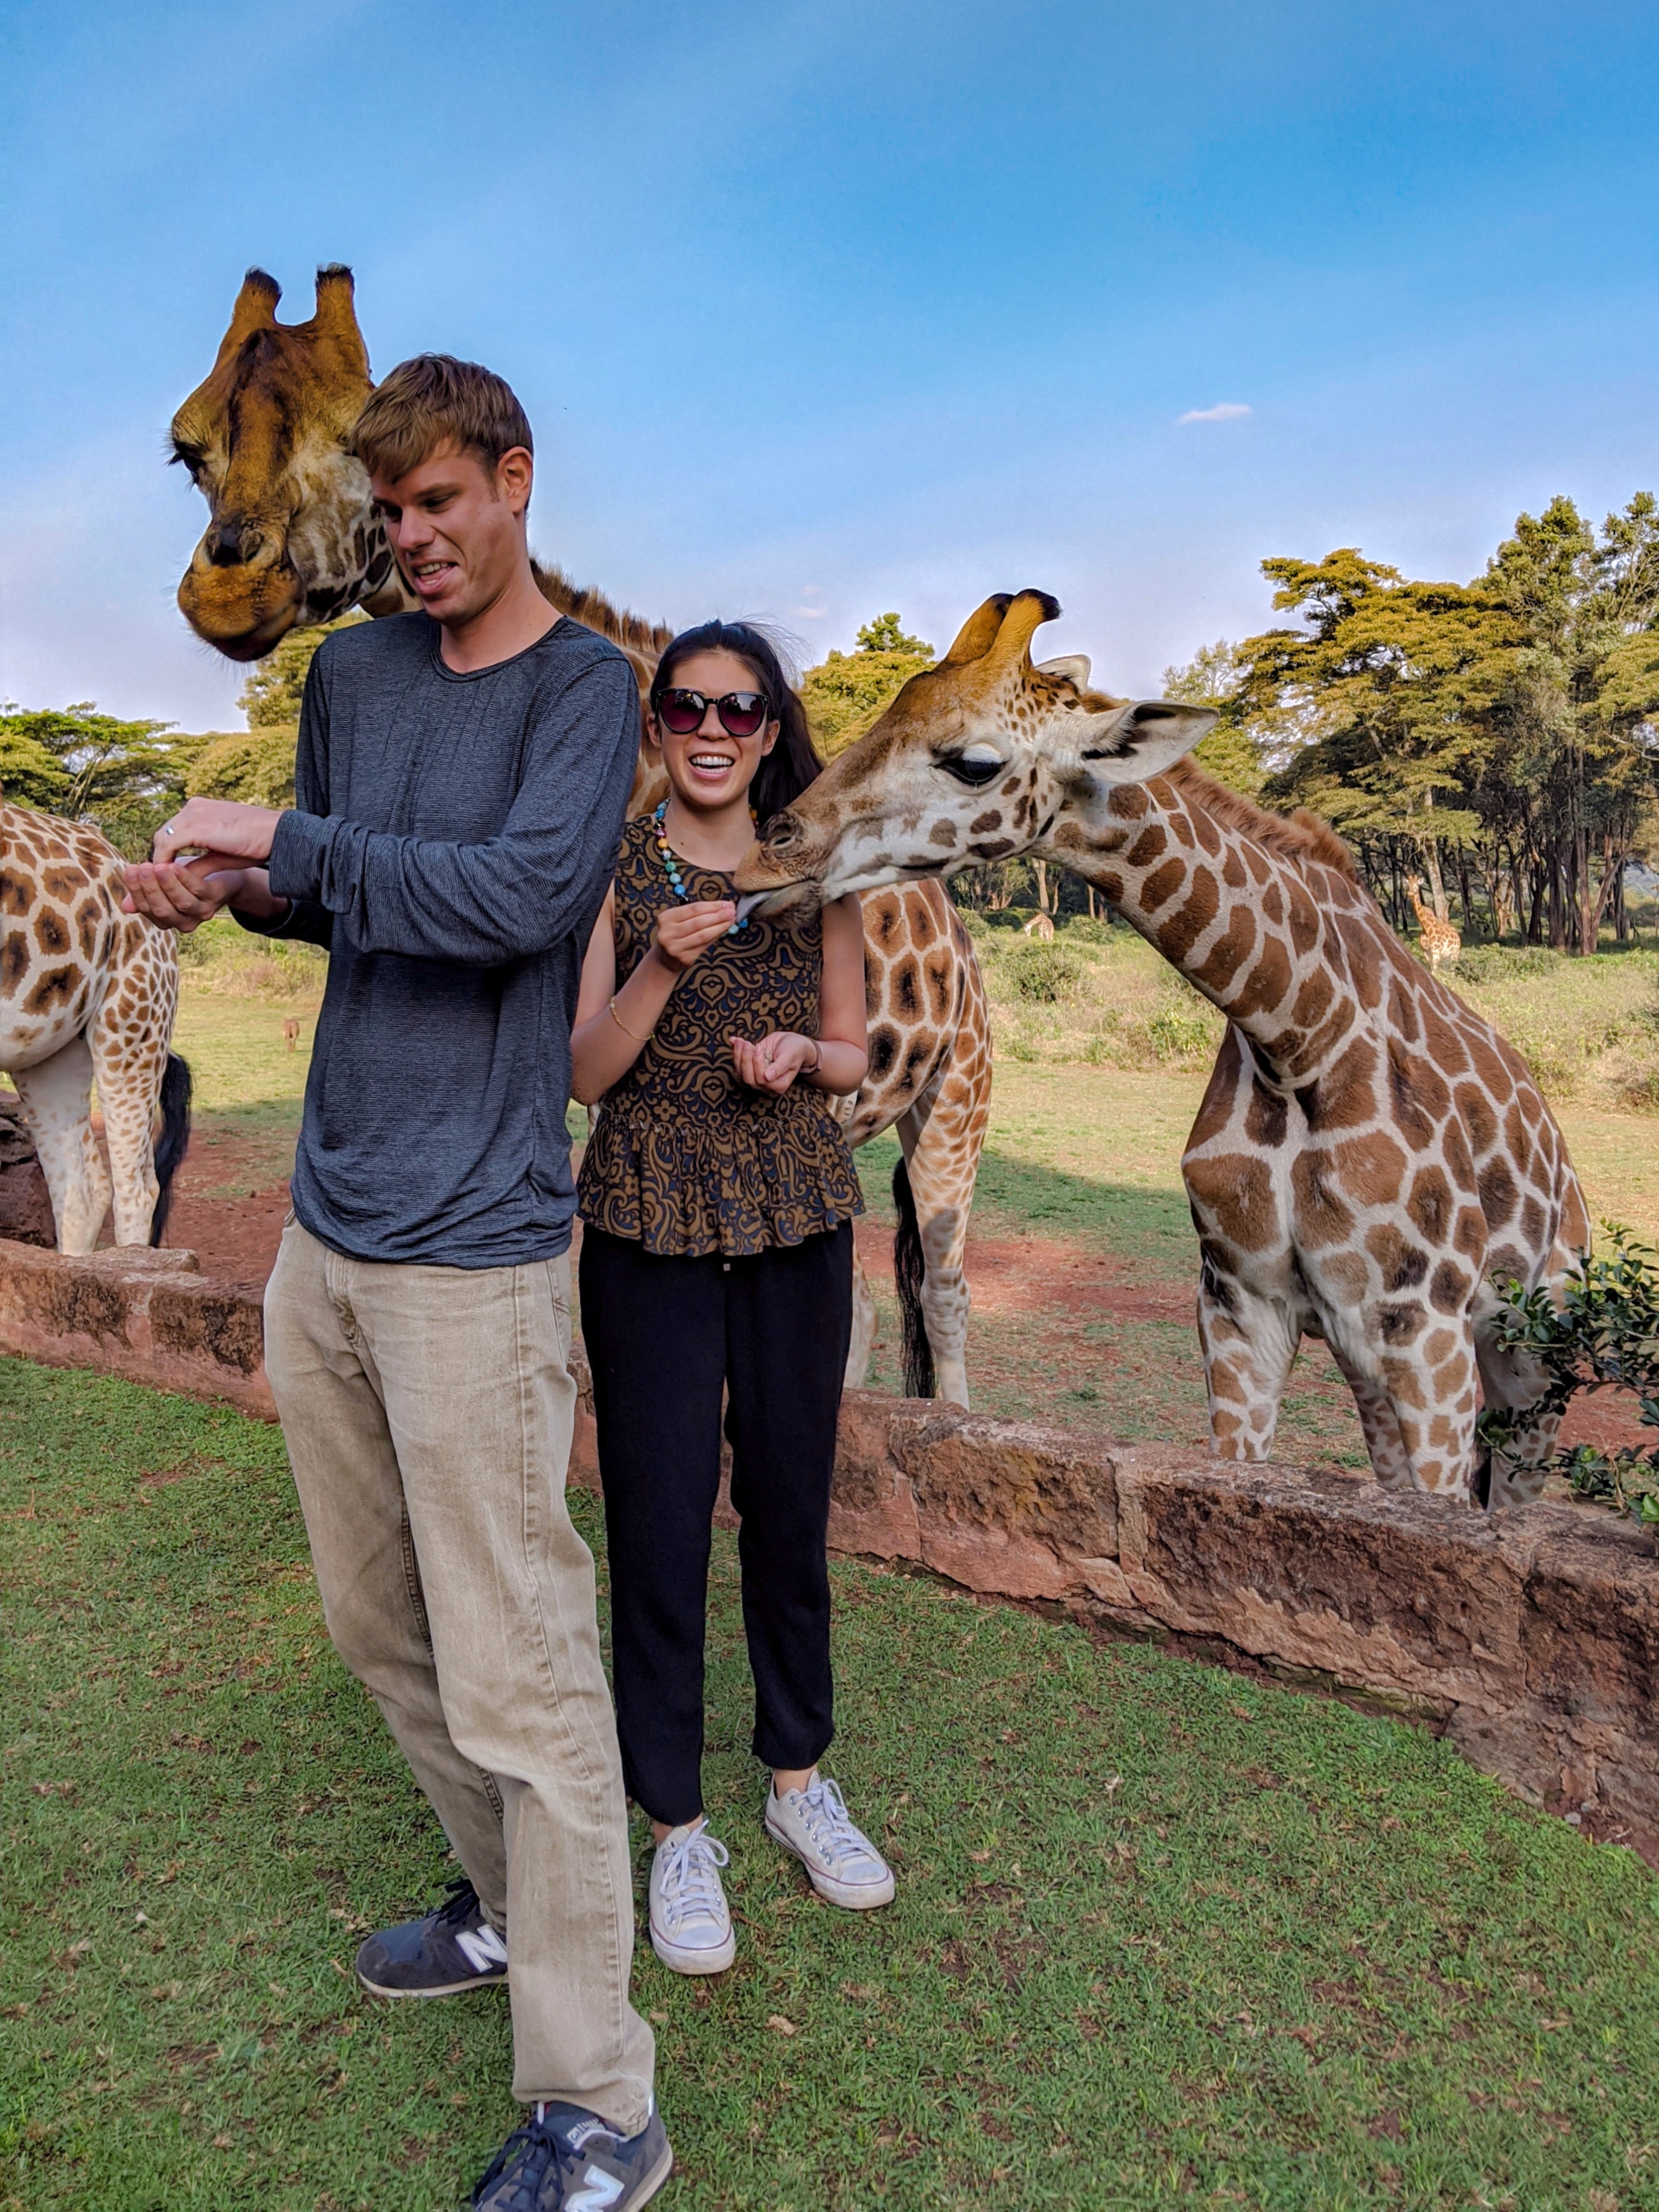 Feeding giraffes at Giraffe Manor